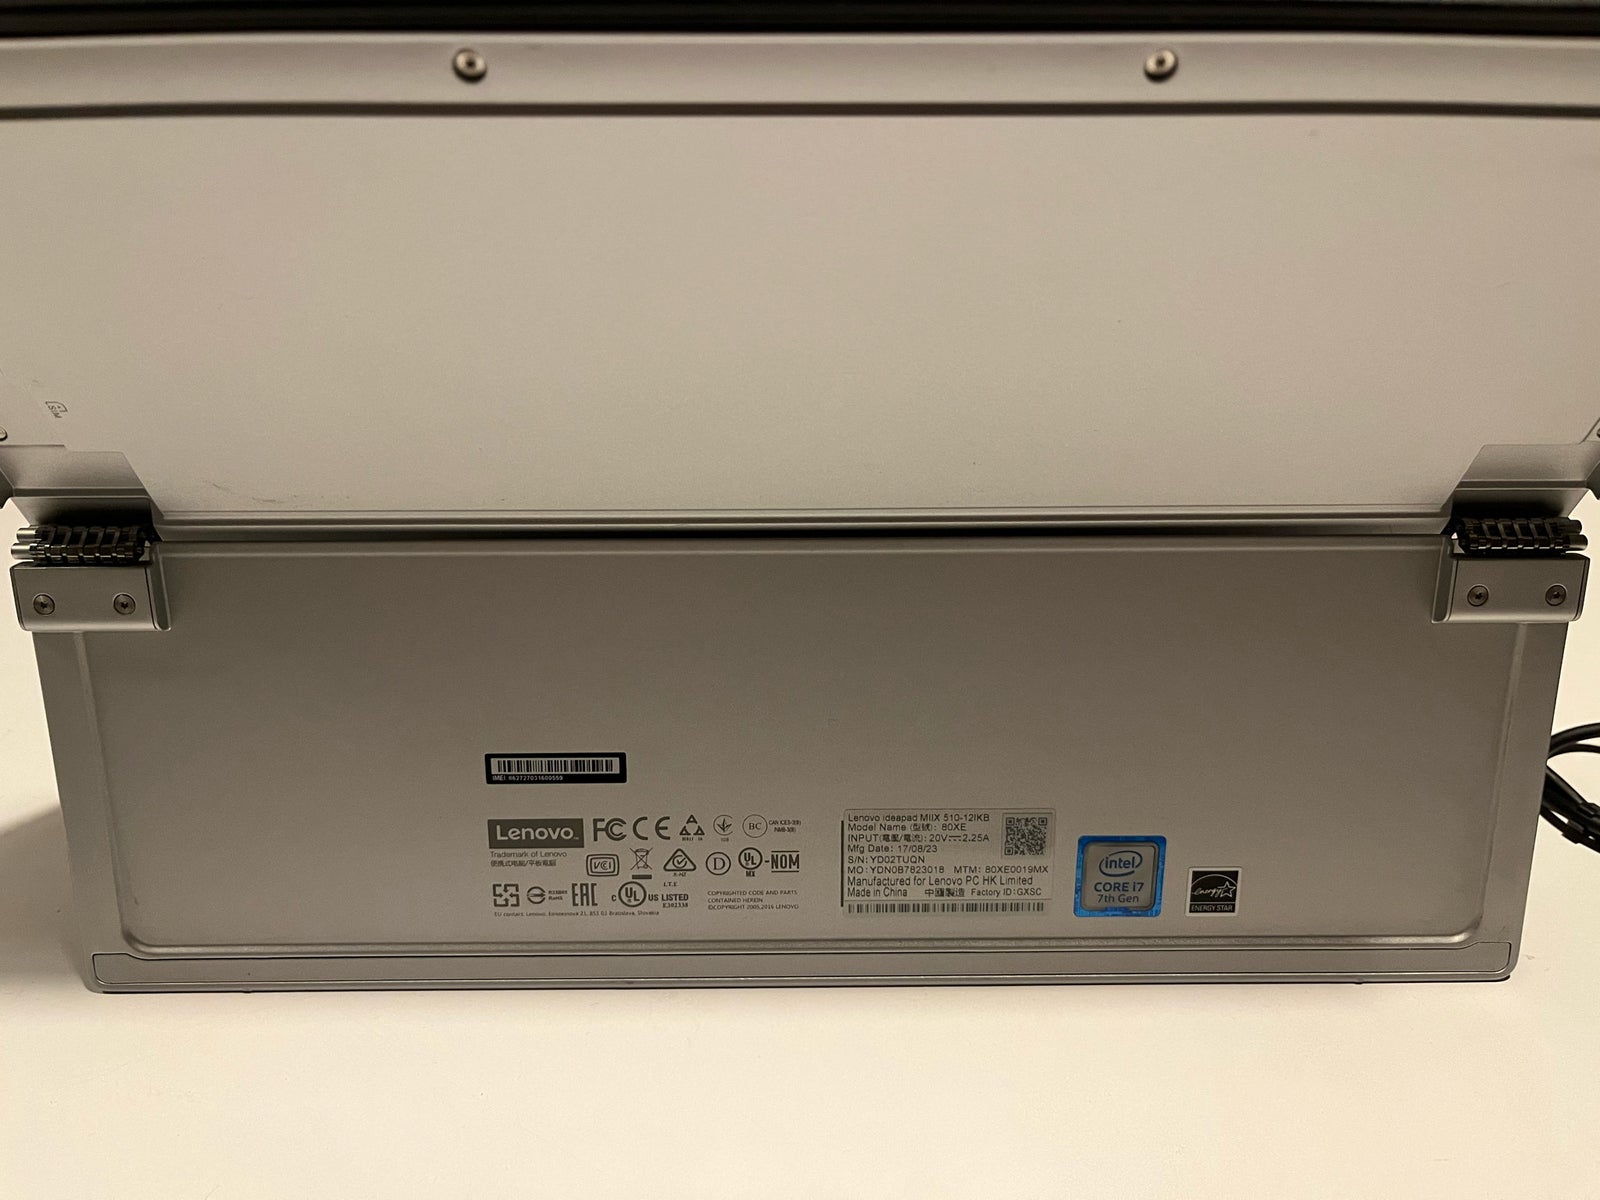 Lenovo Miix 520 12,2” FHD - I7 - 4G - SSD, I7 7500 GHz, 8 gb GB ram